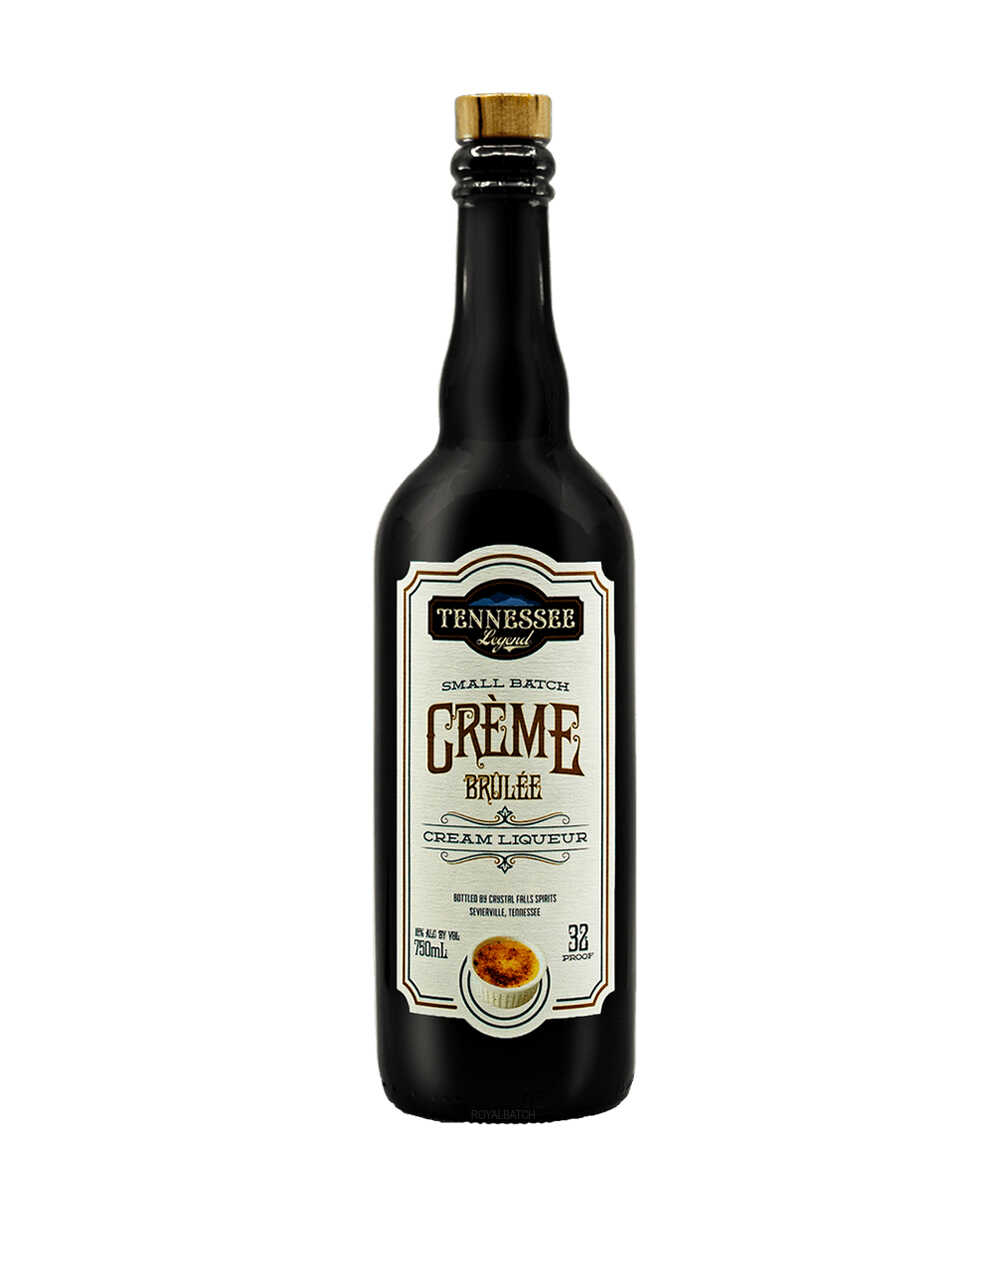 Tennessee Legend Small Batch Creme Brulee Cream Liqueur